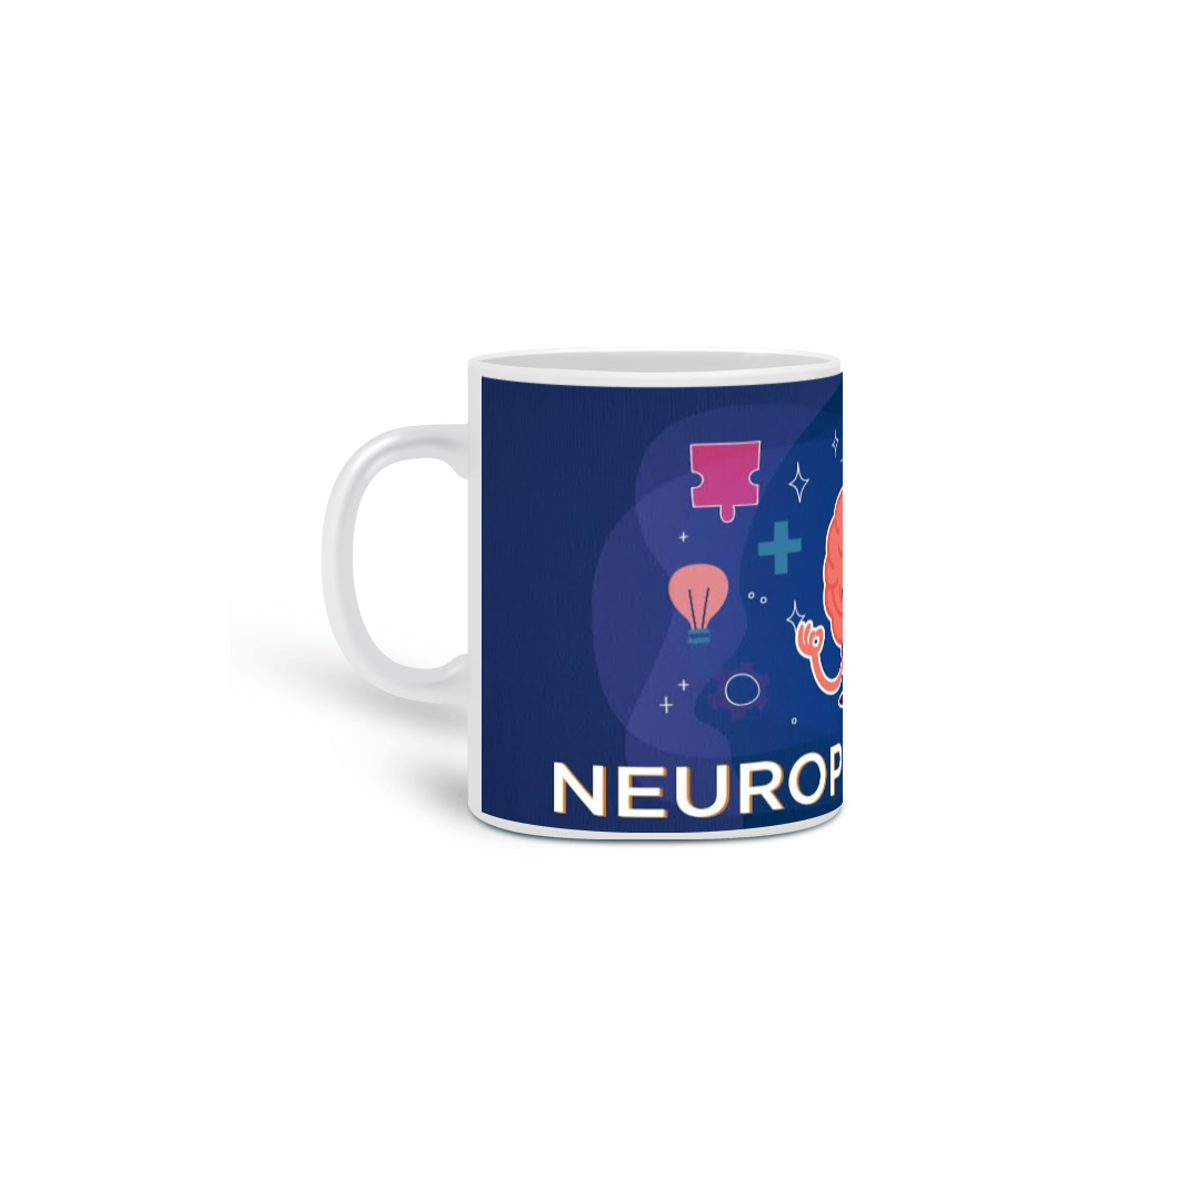 Nome do produto: Neuropsicologia